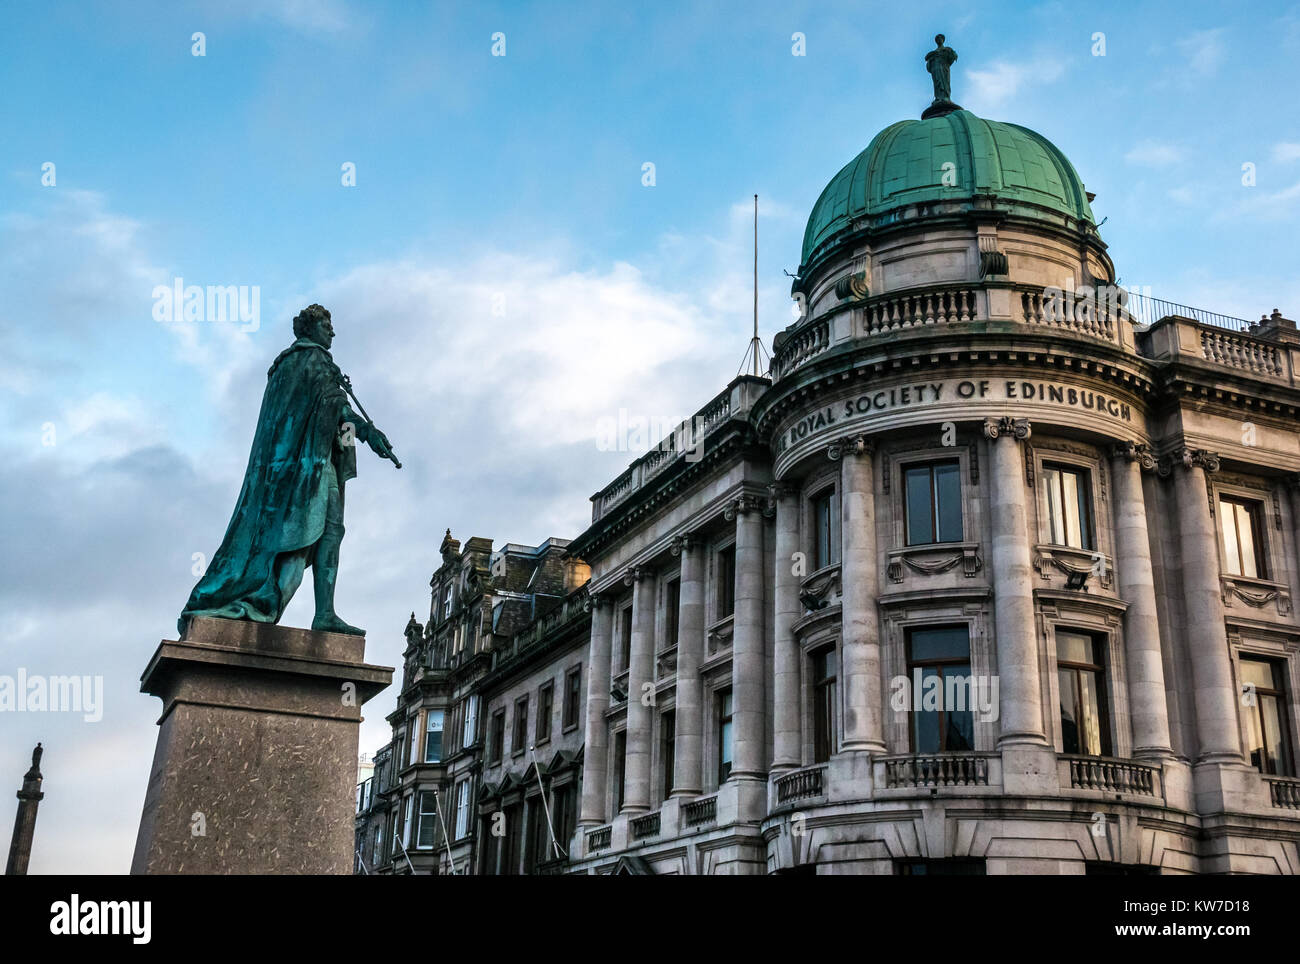 Royal Society of Edinburgh building, George Street, Edinburgh, Scotland, UK, and statue of King George IV by Sir Francis Leggatt Chantrey Stock Photo